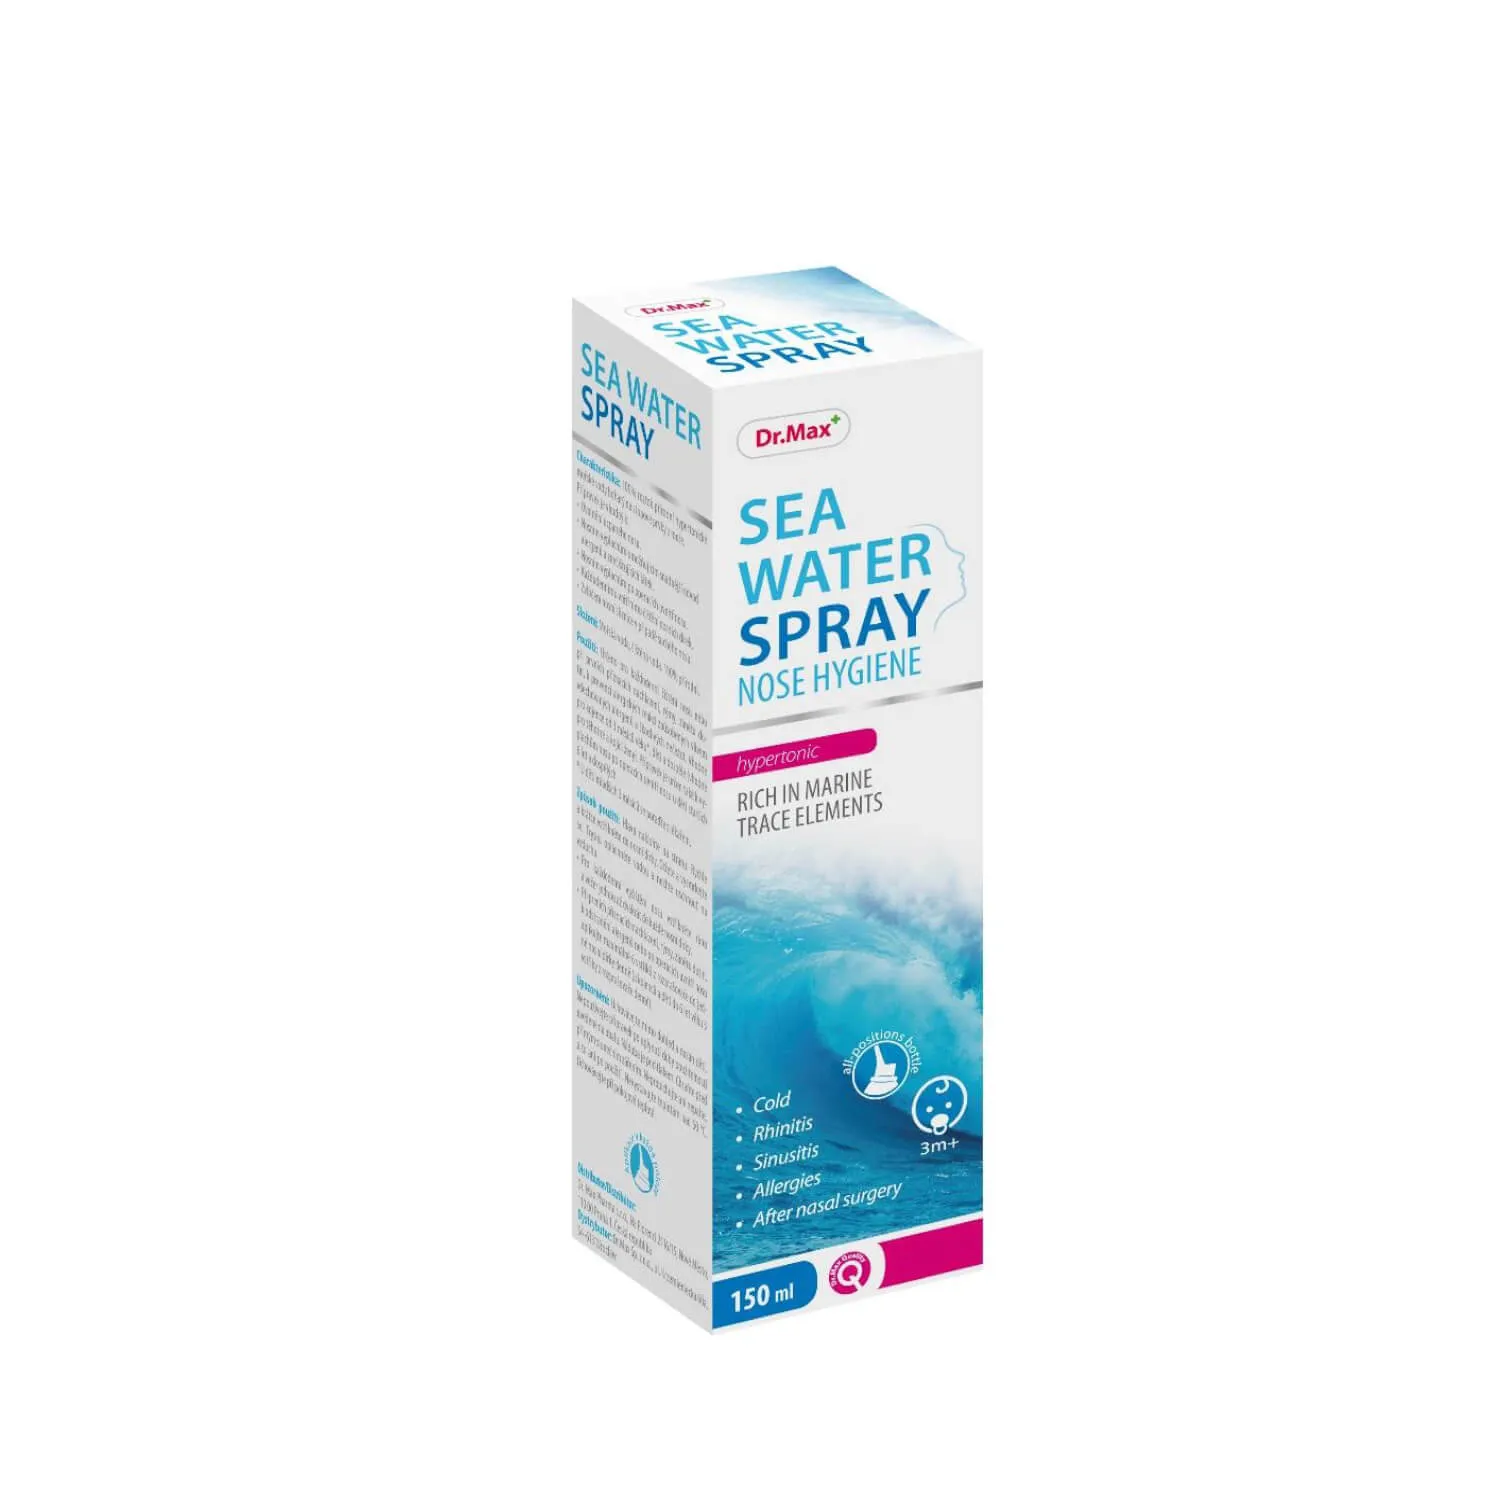 Sea Water Spray Nose Hygiene Dr.Max, spray do nosa, 150 ml